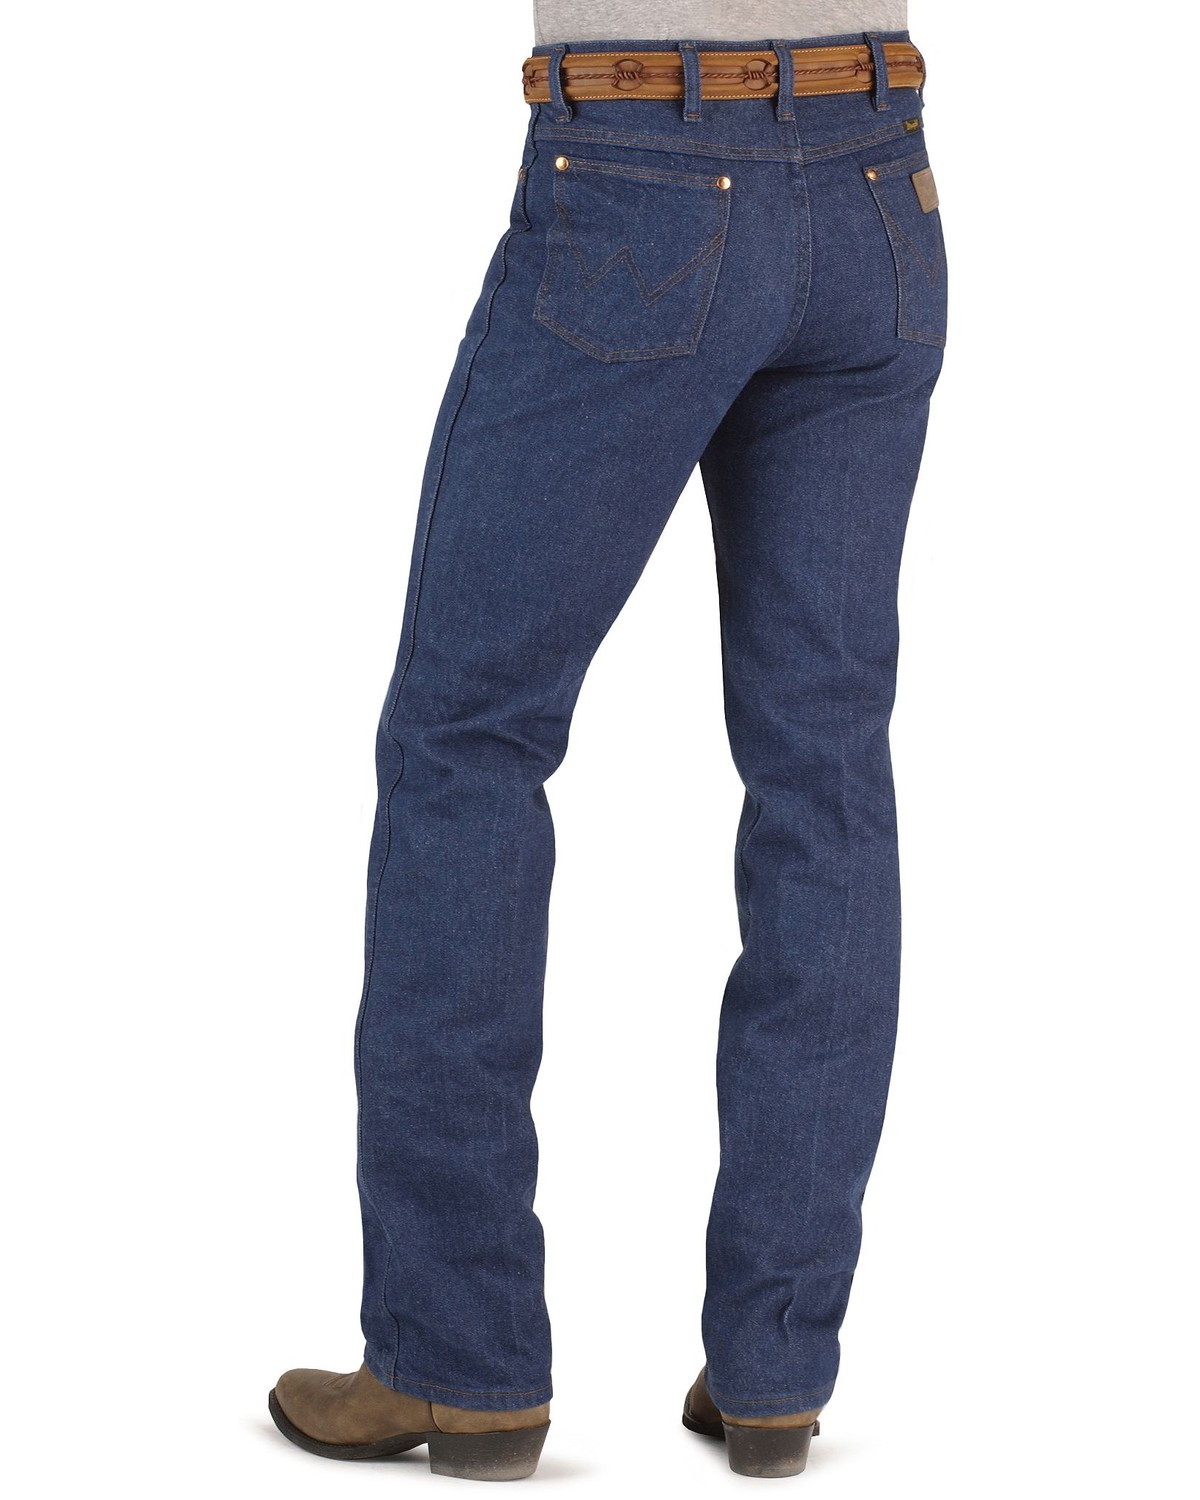 Wrangler Jeans - 936 Slim Fit Prewashed Denim Jeans - Tall | Sheplers